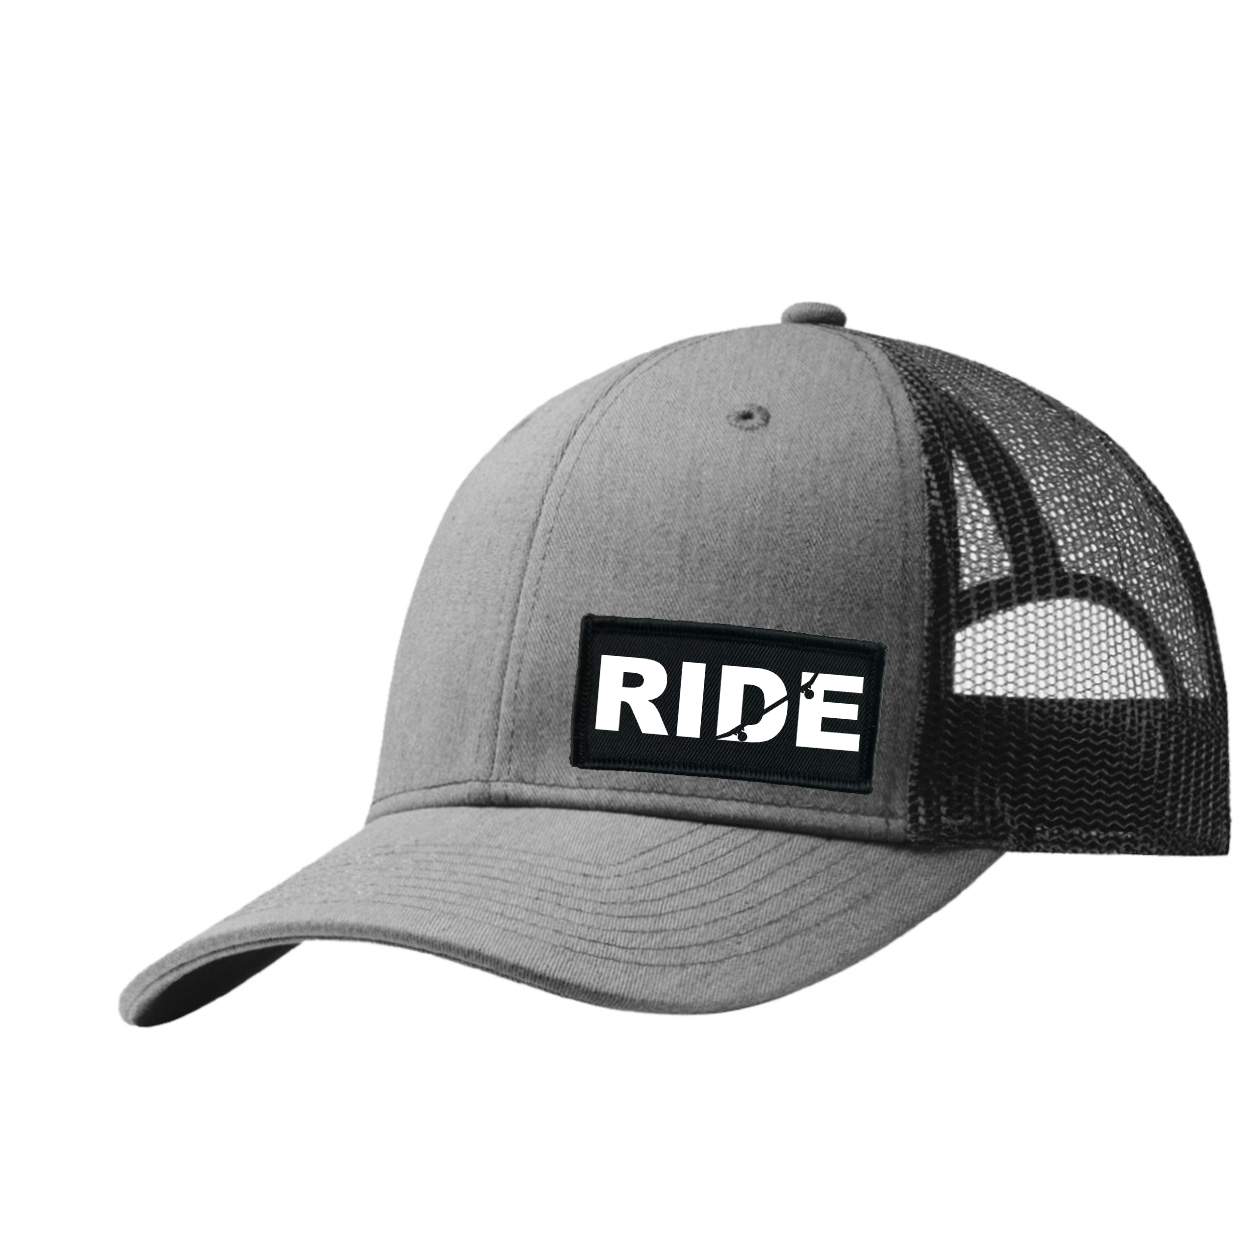 Ride Skateboard Logo Night Out Woven Patch Snapback Trucker Hat Heather Gray/Black (White Logo)